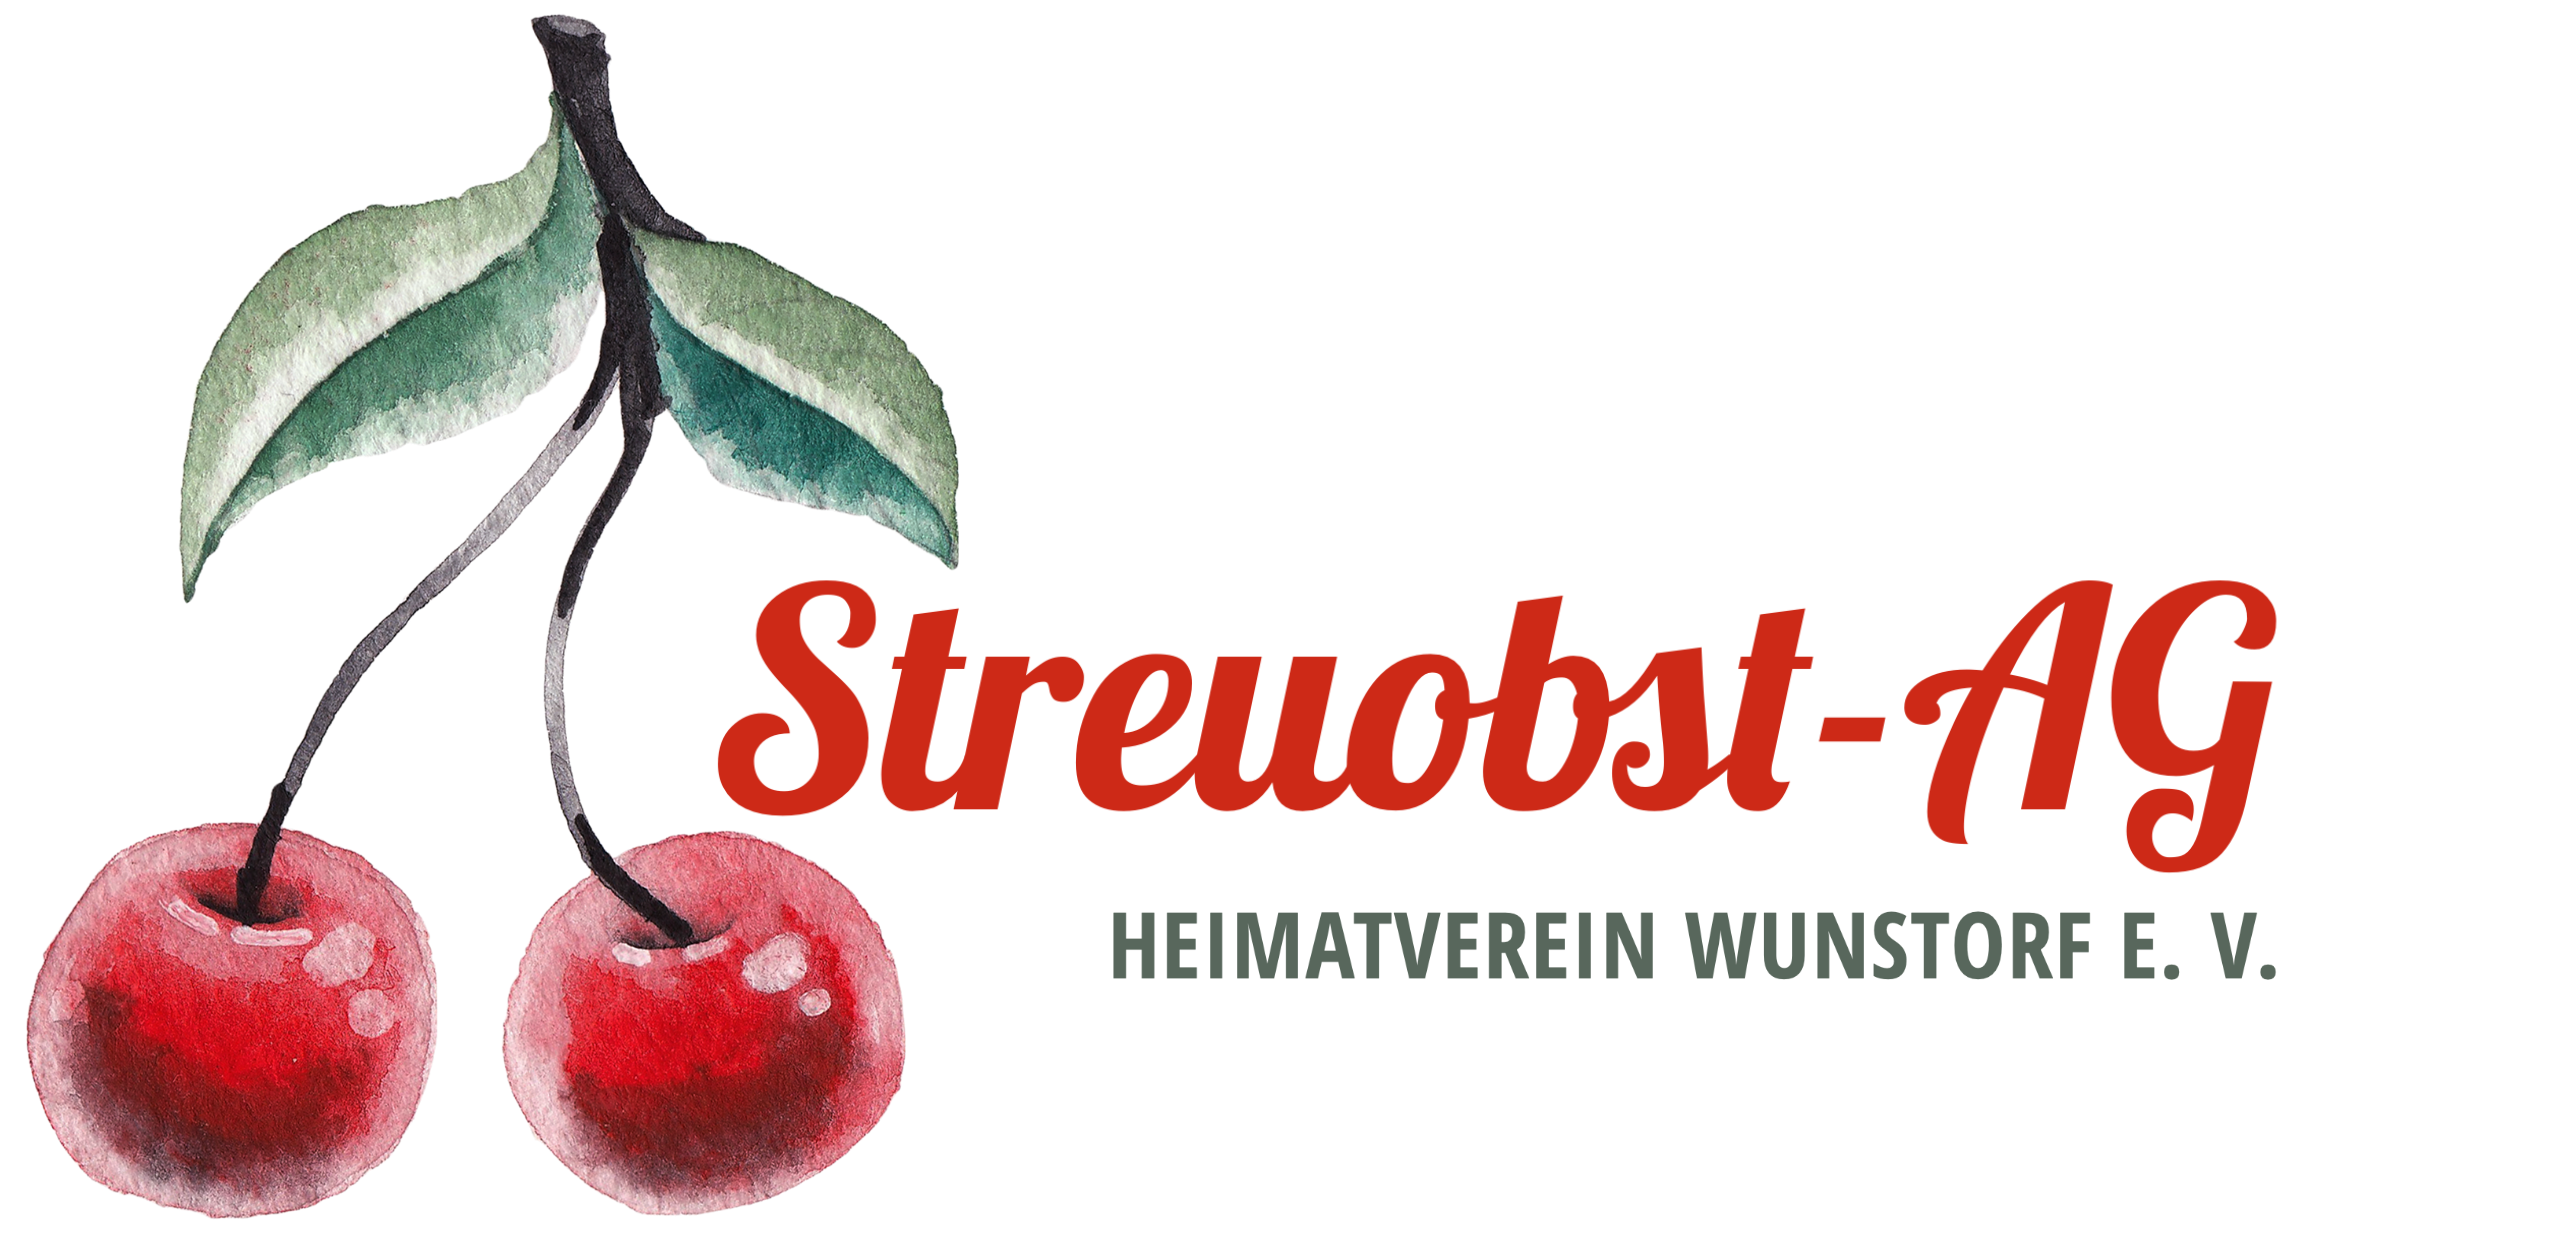 Streuobst-AG Wunstorf